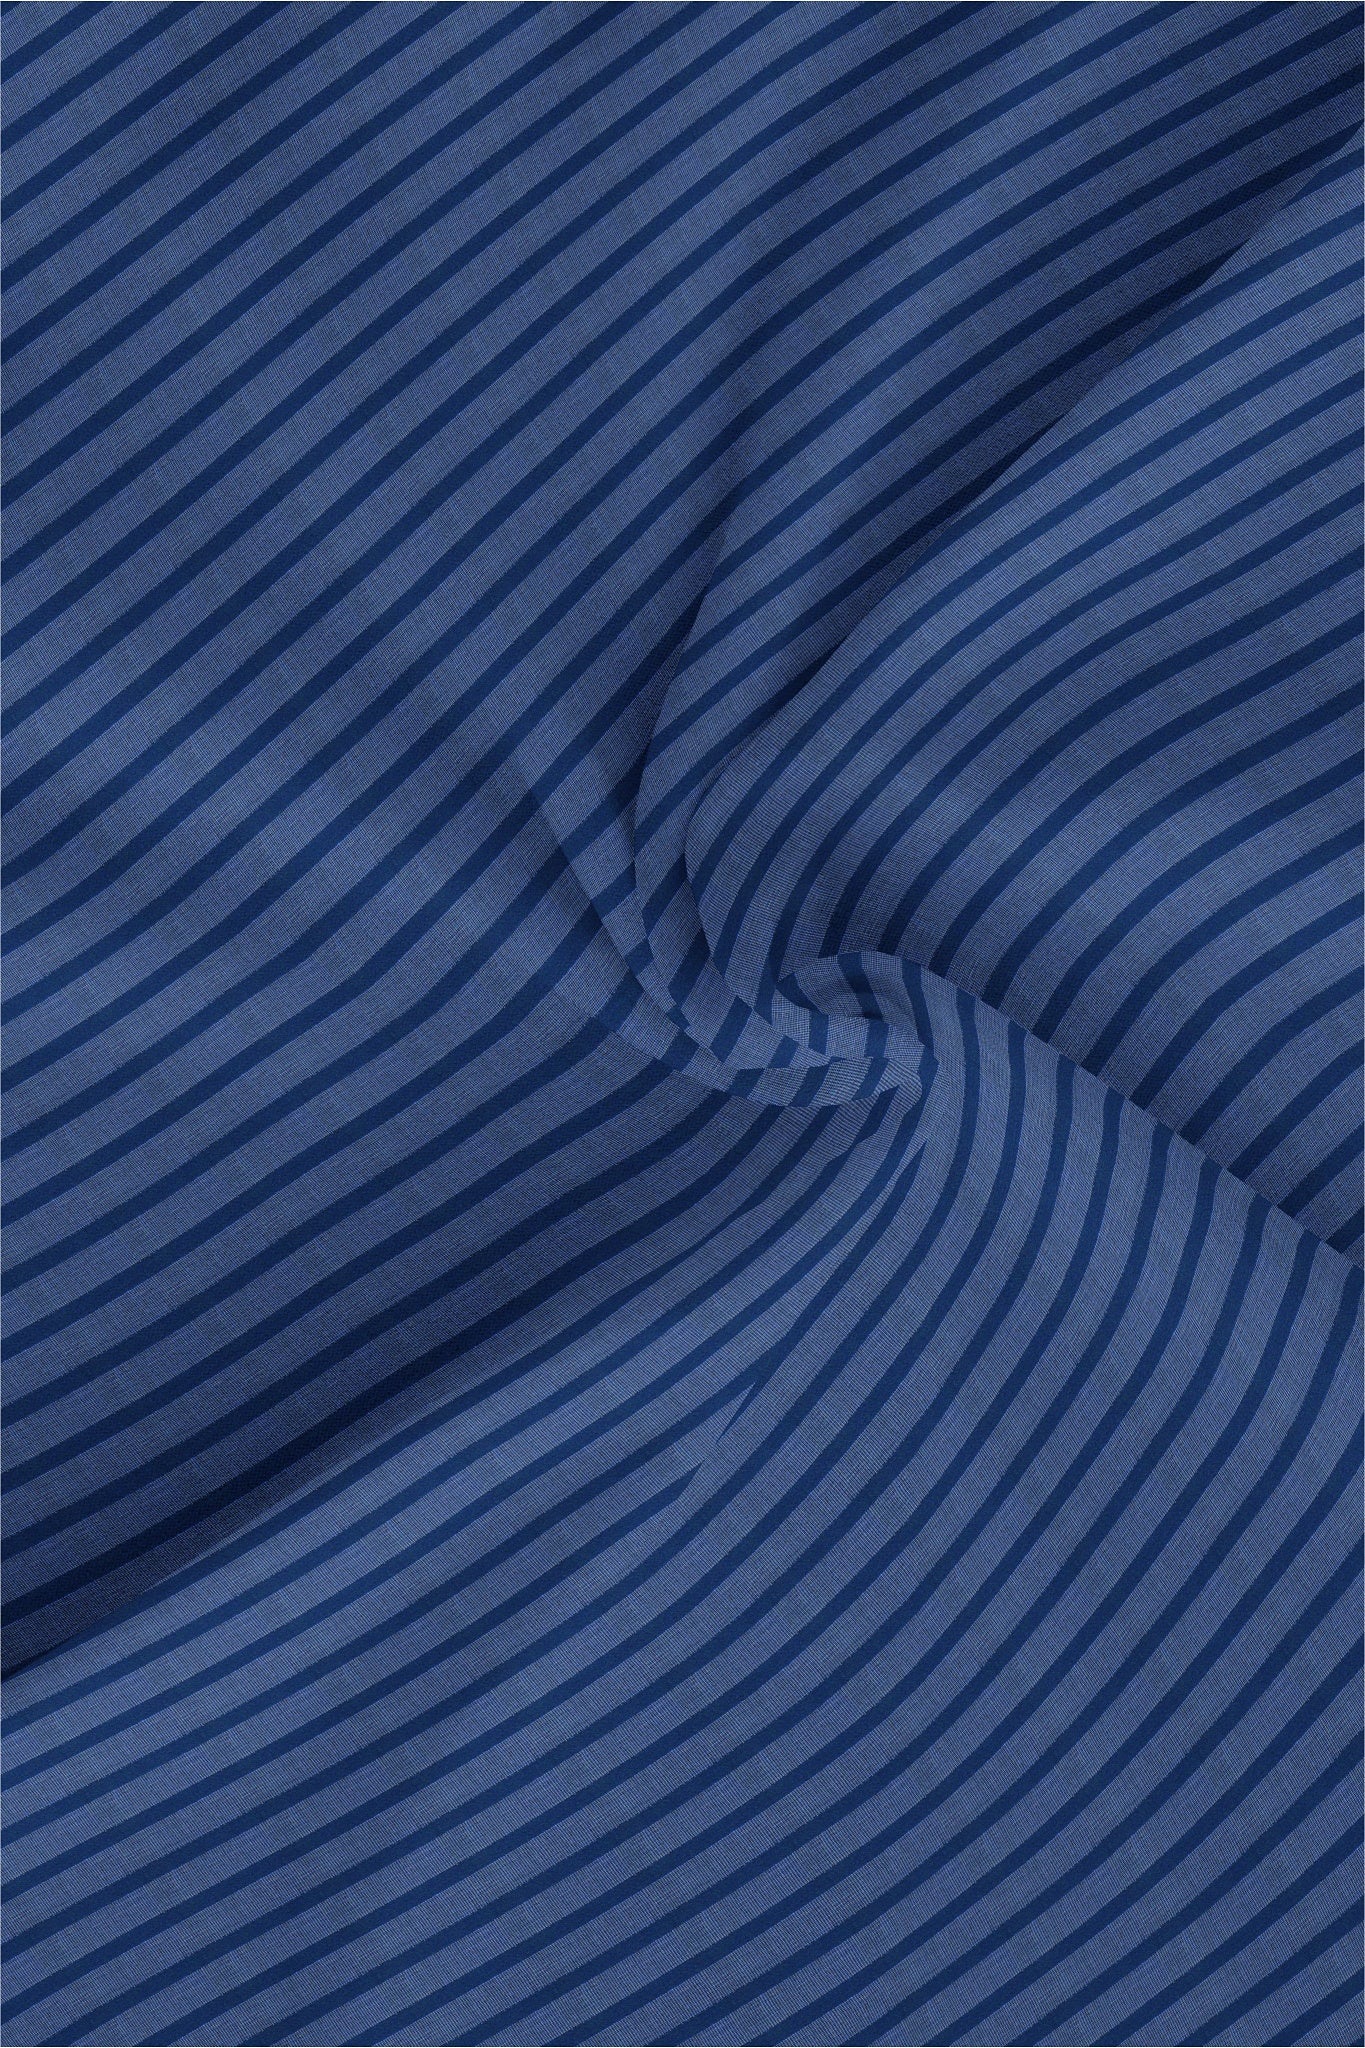 Aegeon Blue and Azure Blue Chalk Stripes Premium Cotton Shirt